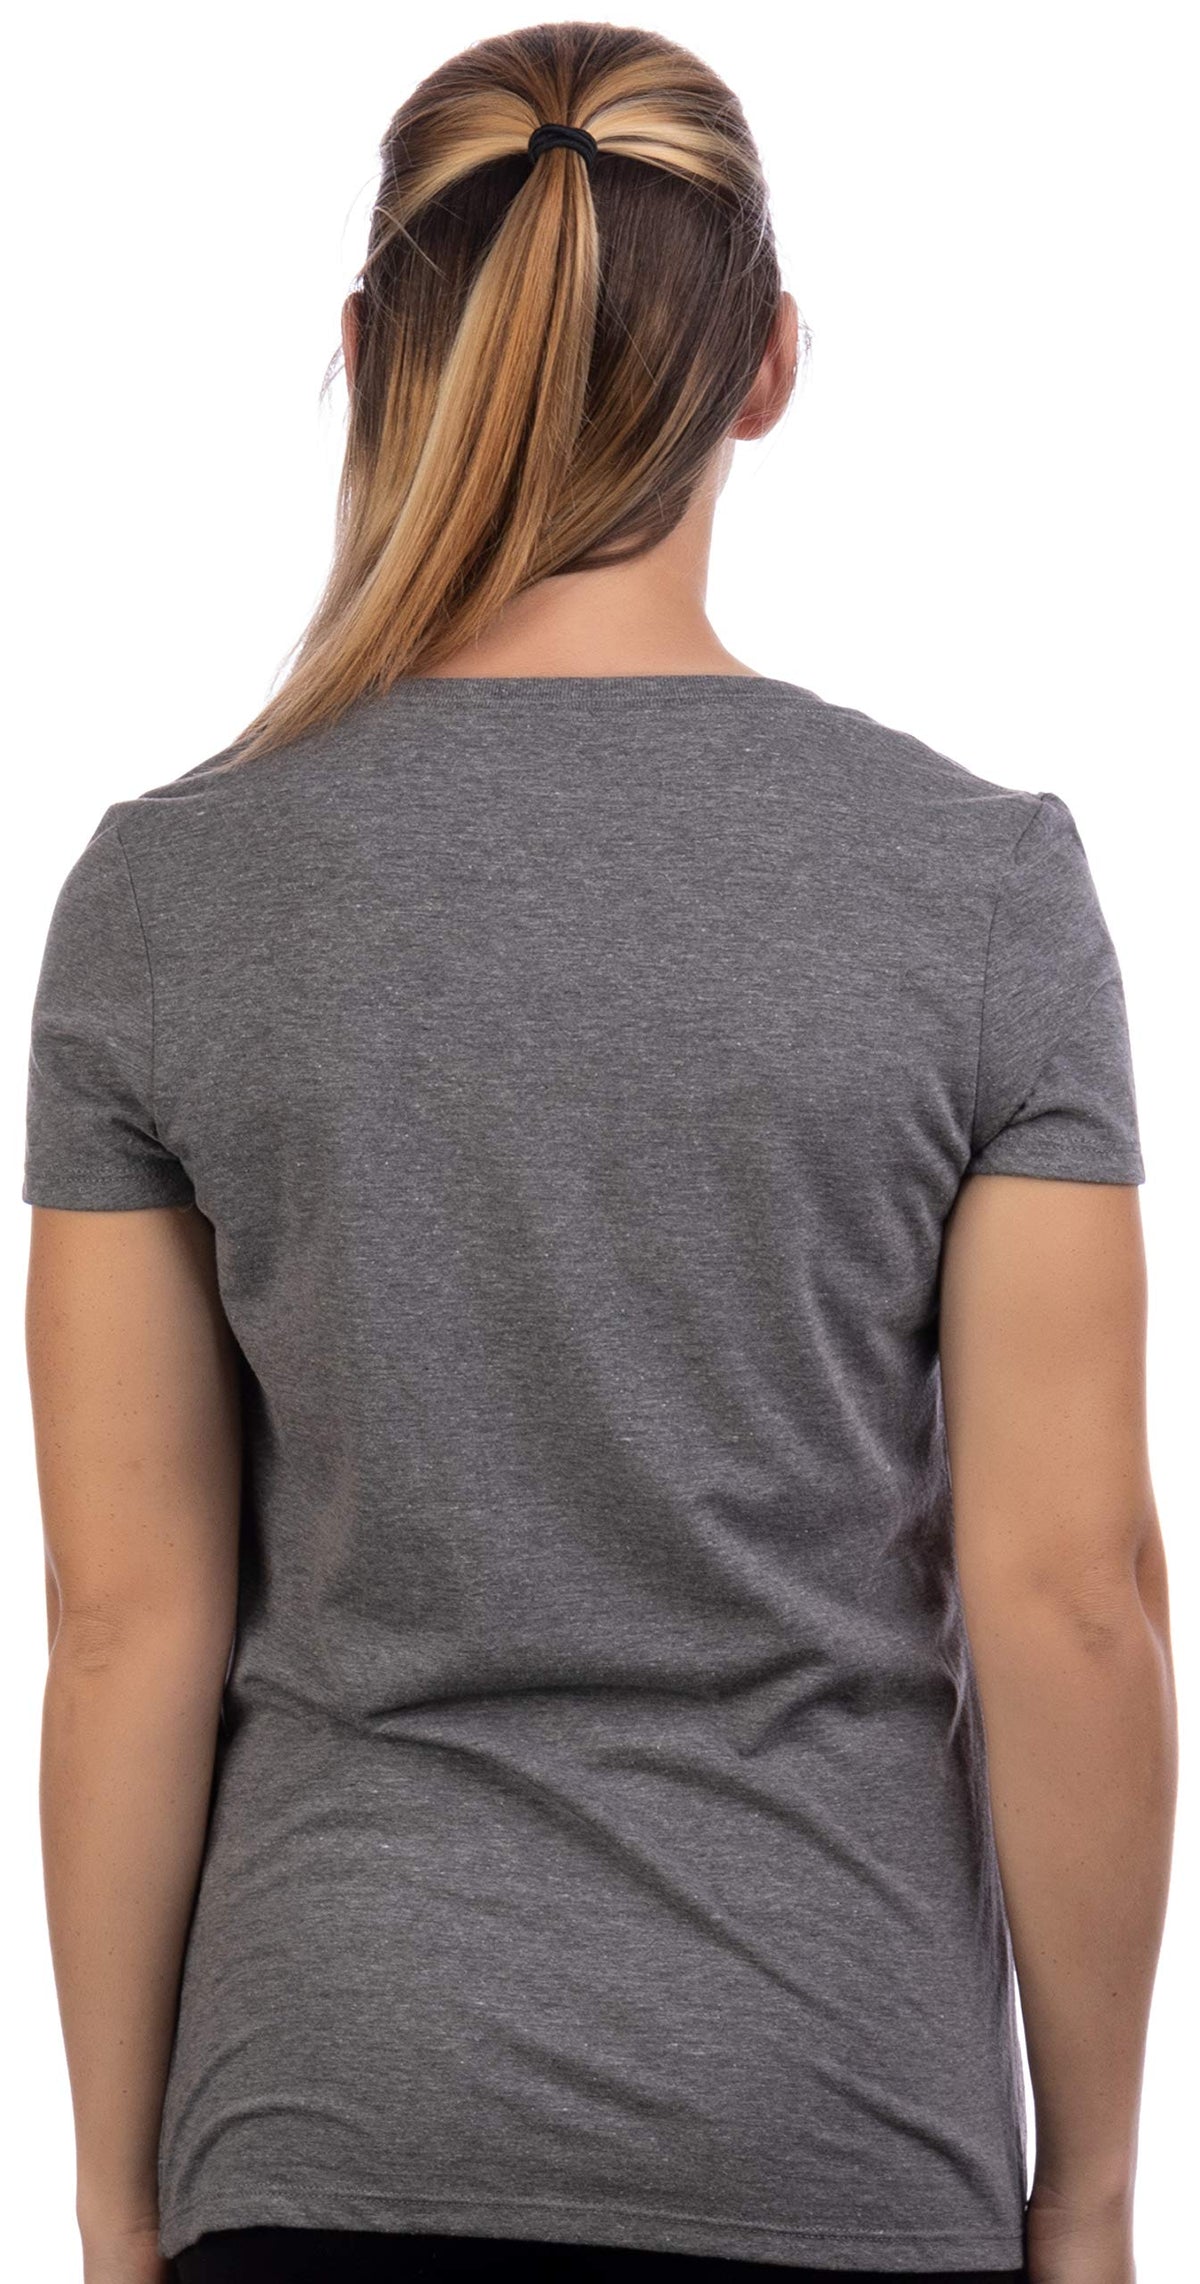 Llamaste | Cute, Funny Yoga Llama Namaste Workout V-neck T-shirt Top for Women